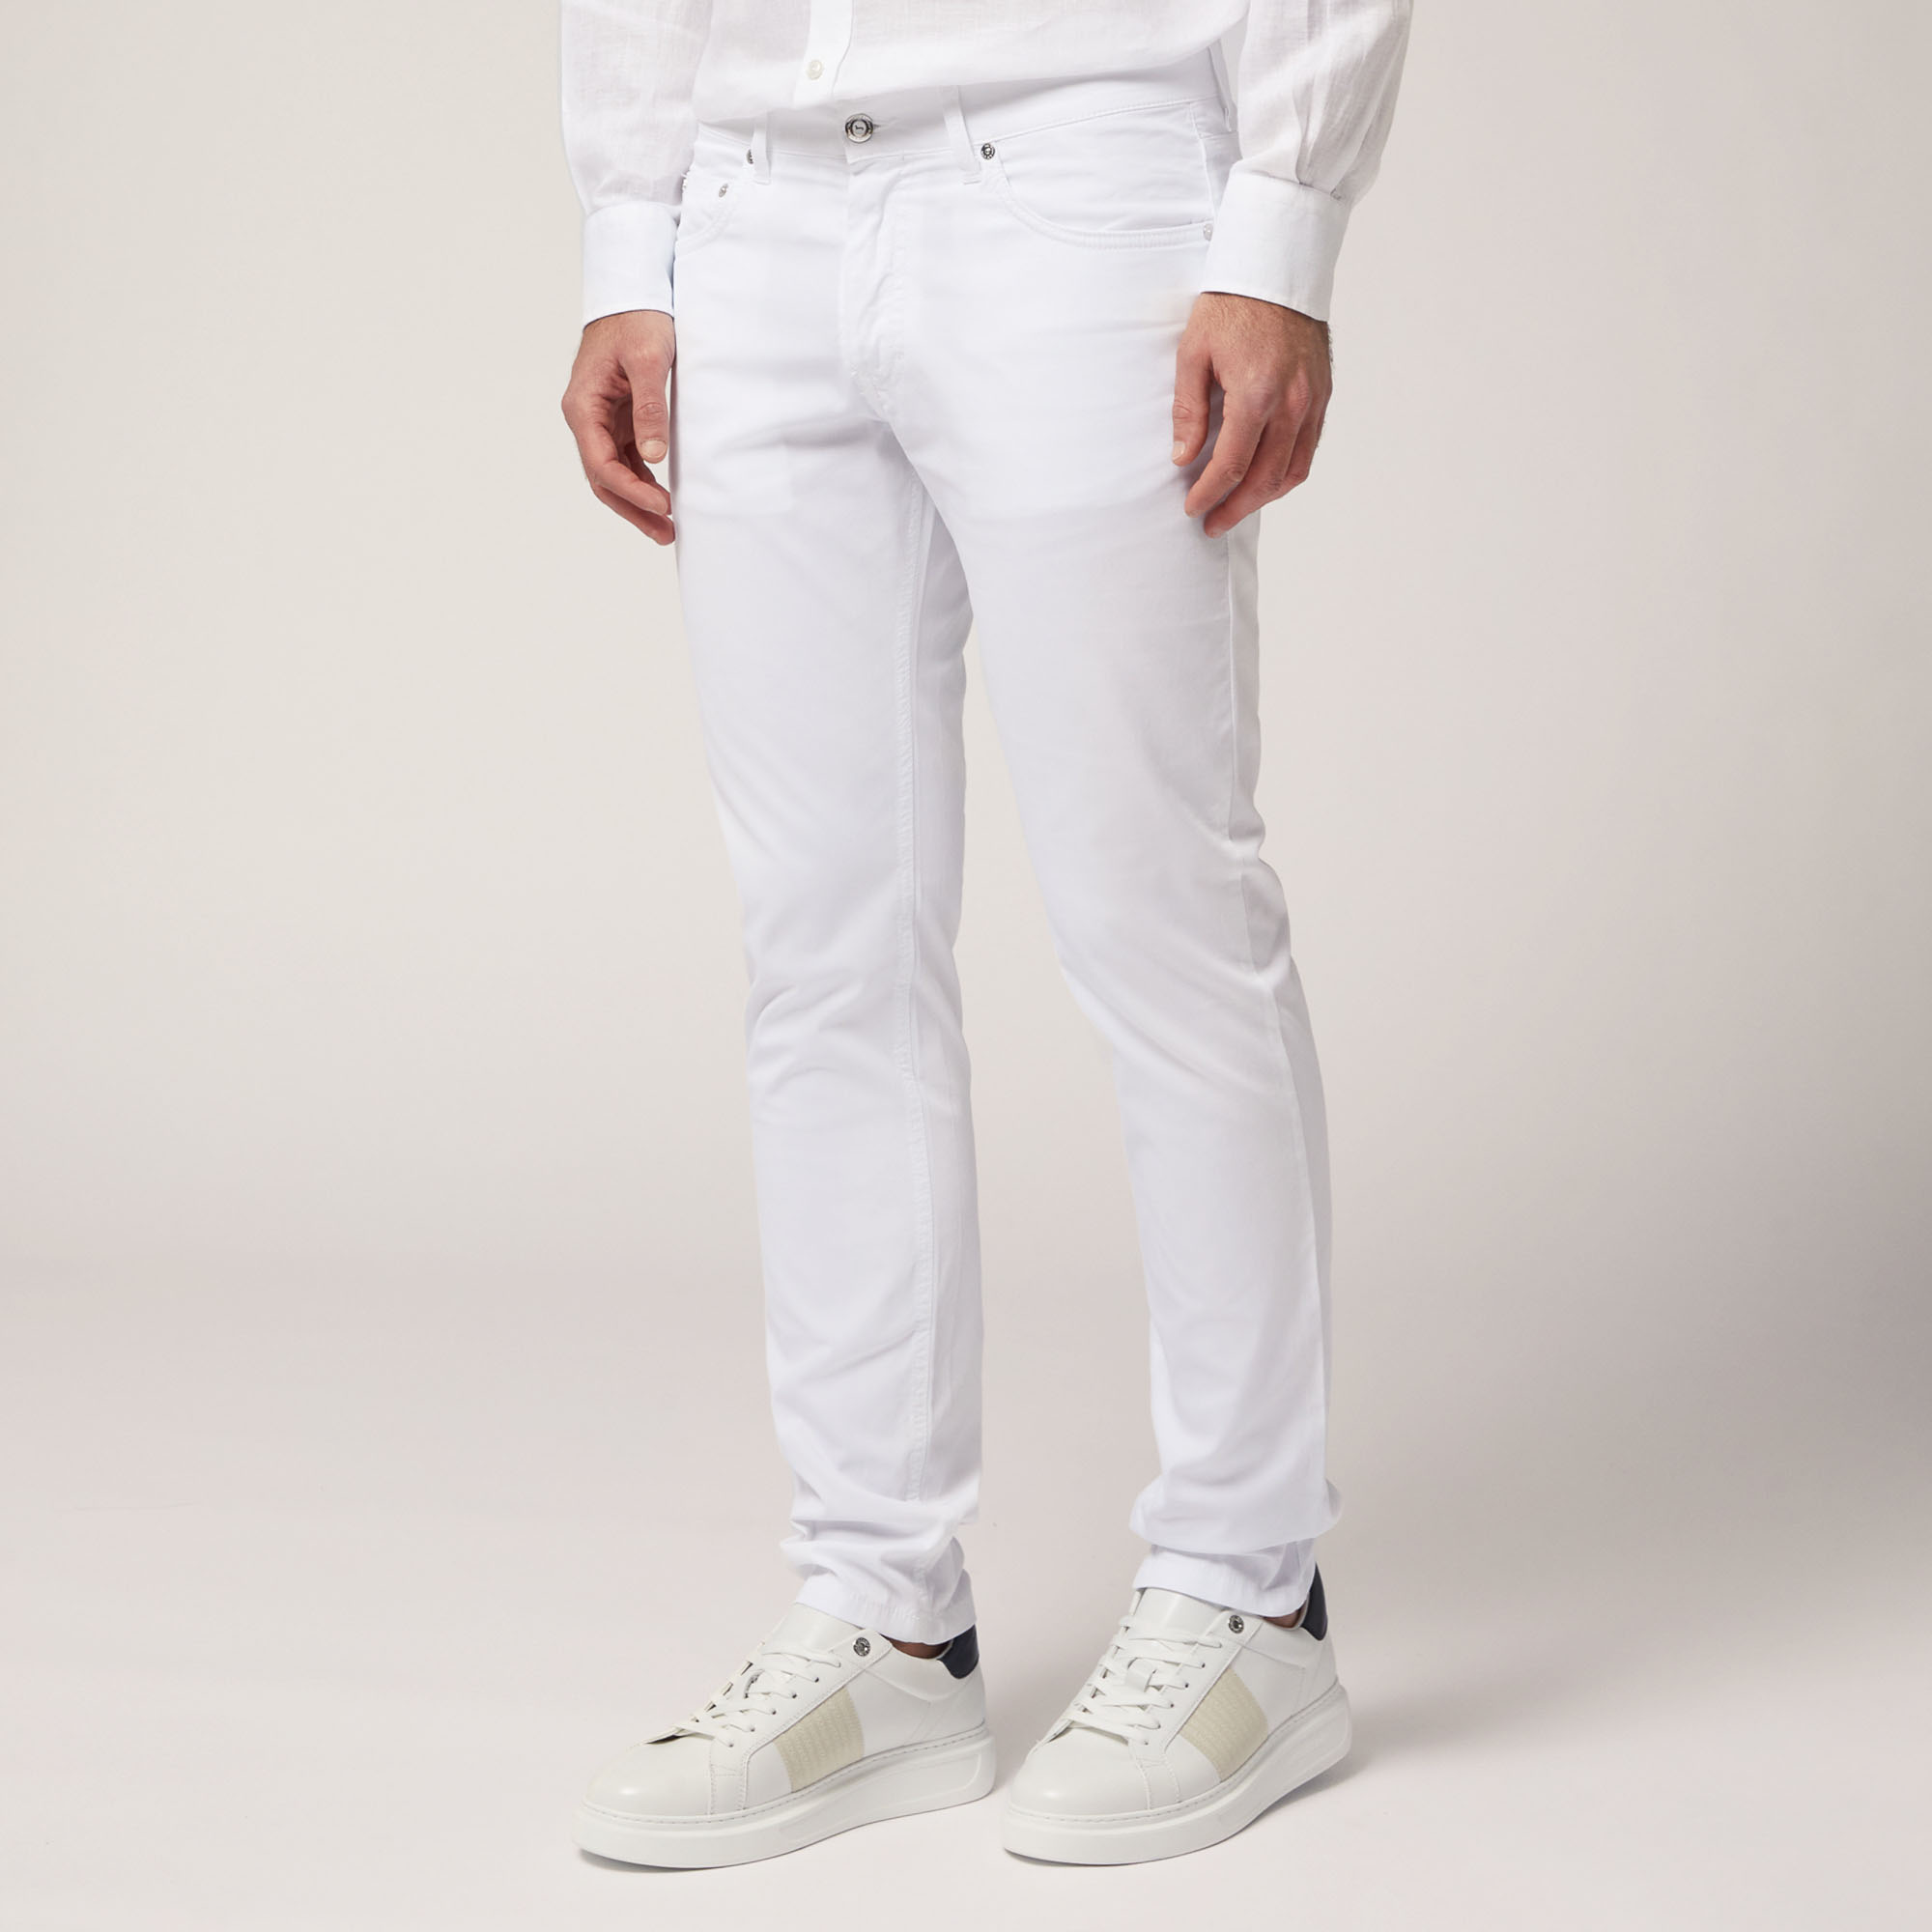 Pantalón de cinco bolsillos ajustado, Blanco, large